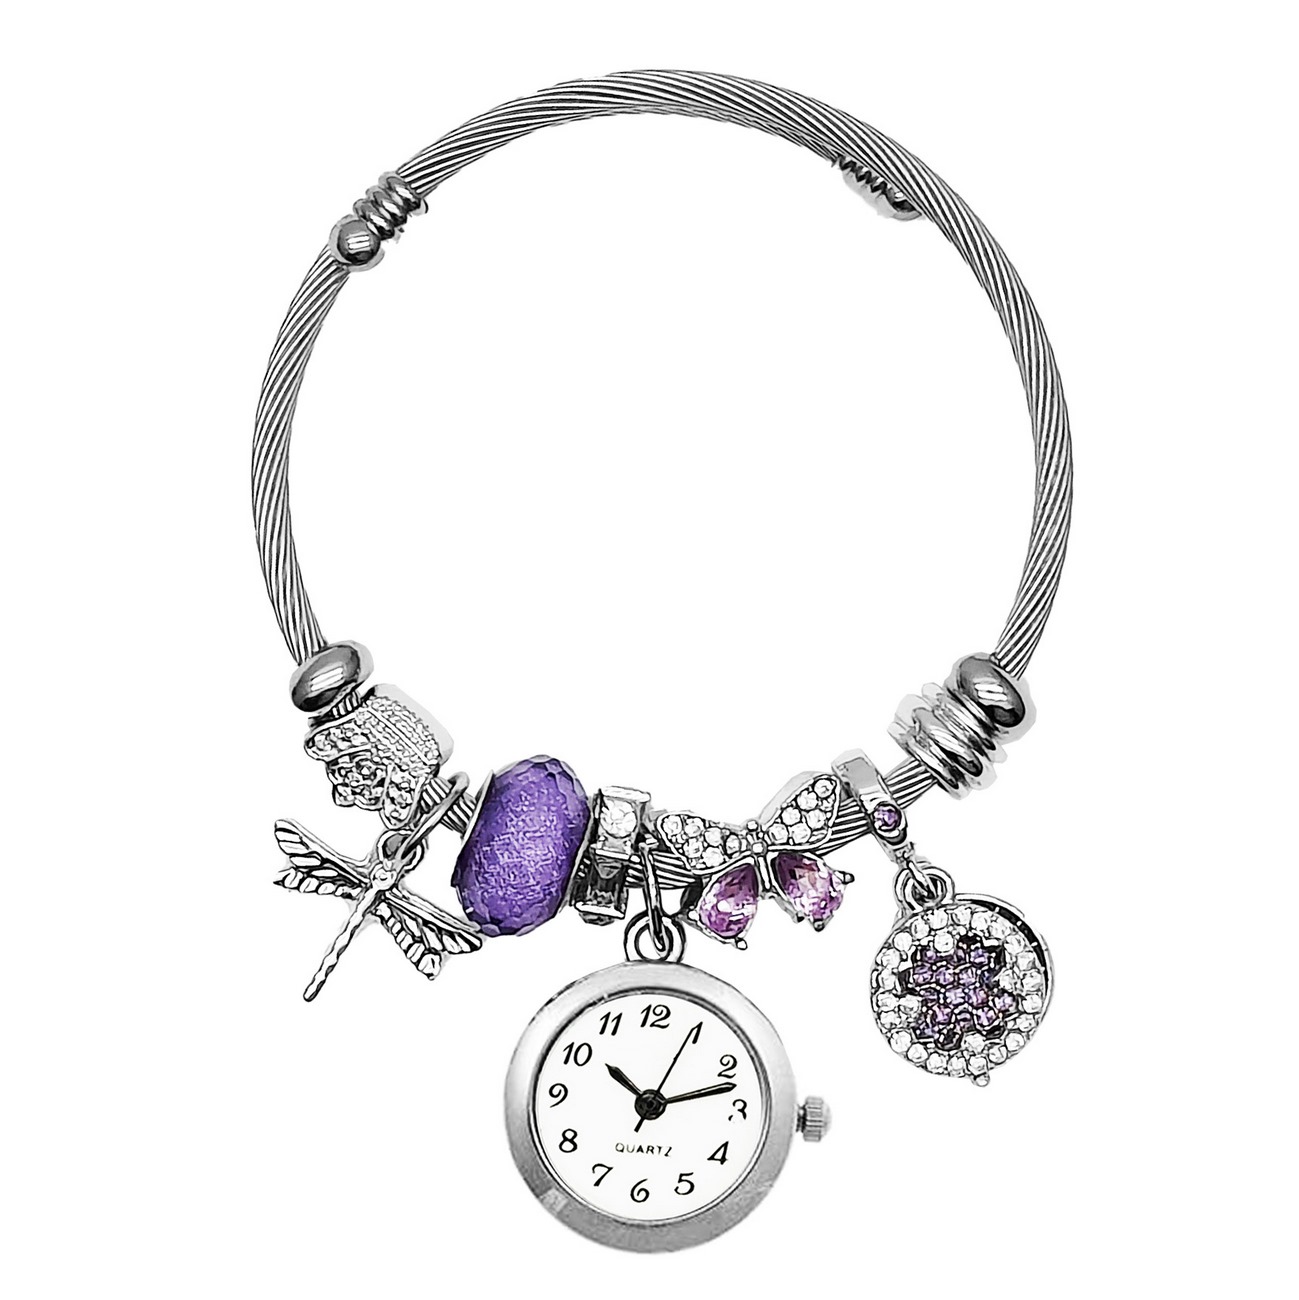 Reloj Mujer Dama Pulsera Acero Libelula Violeta + Estuche 